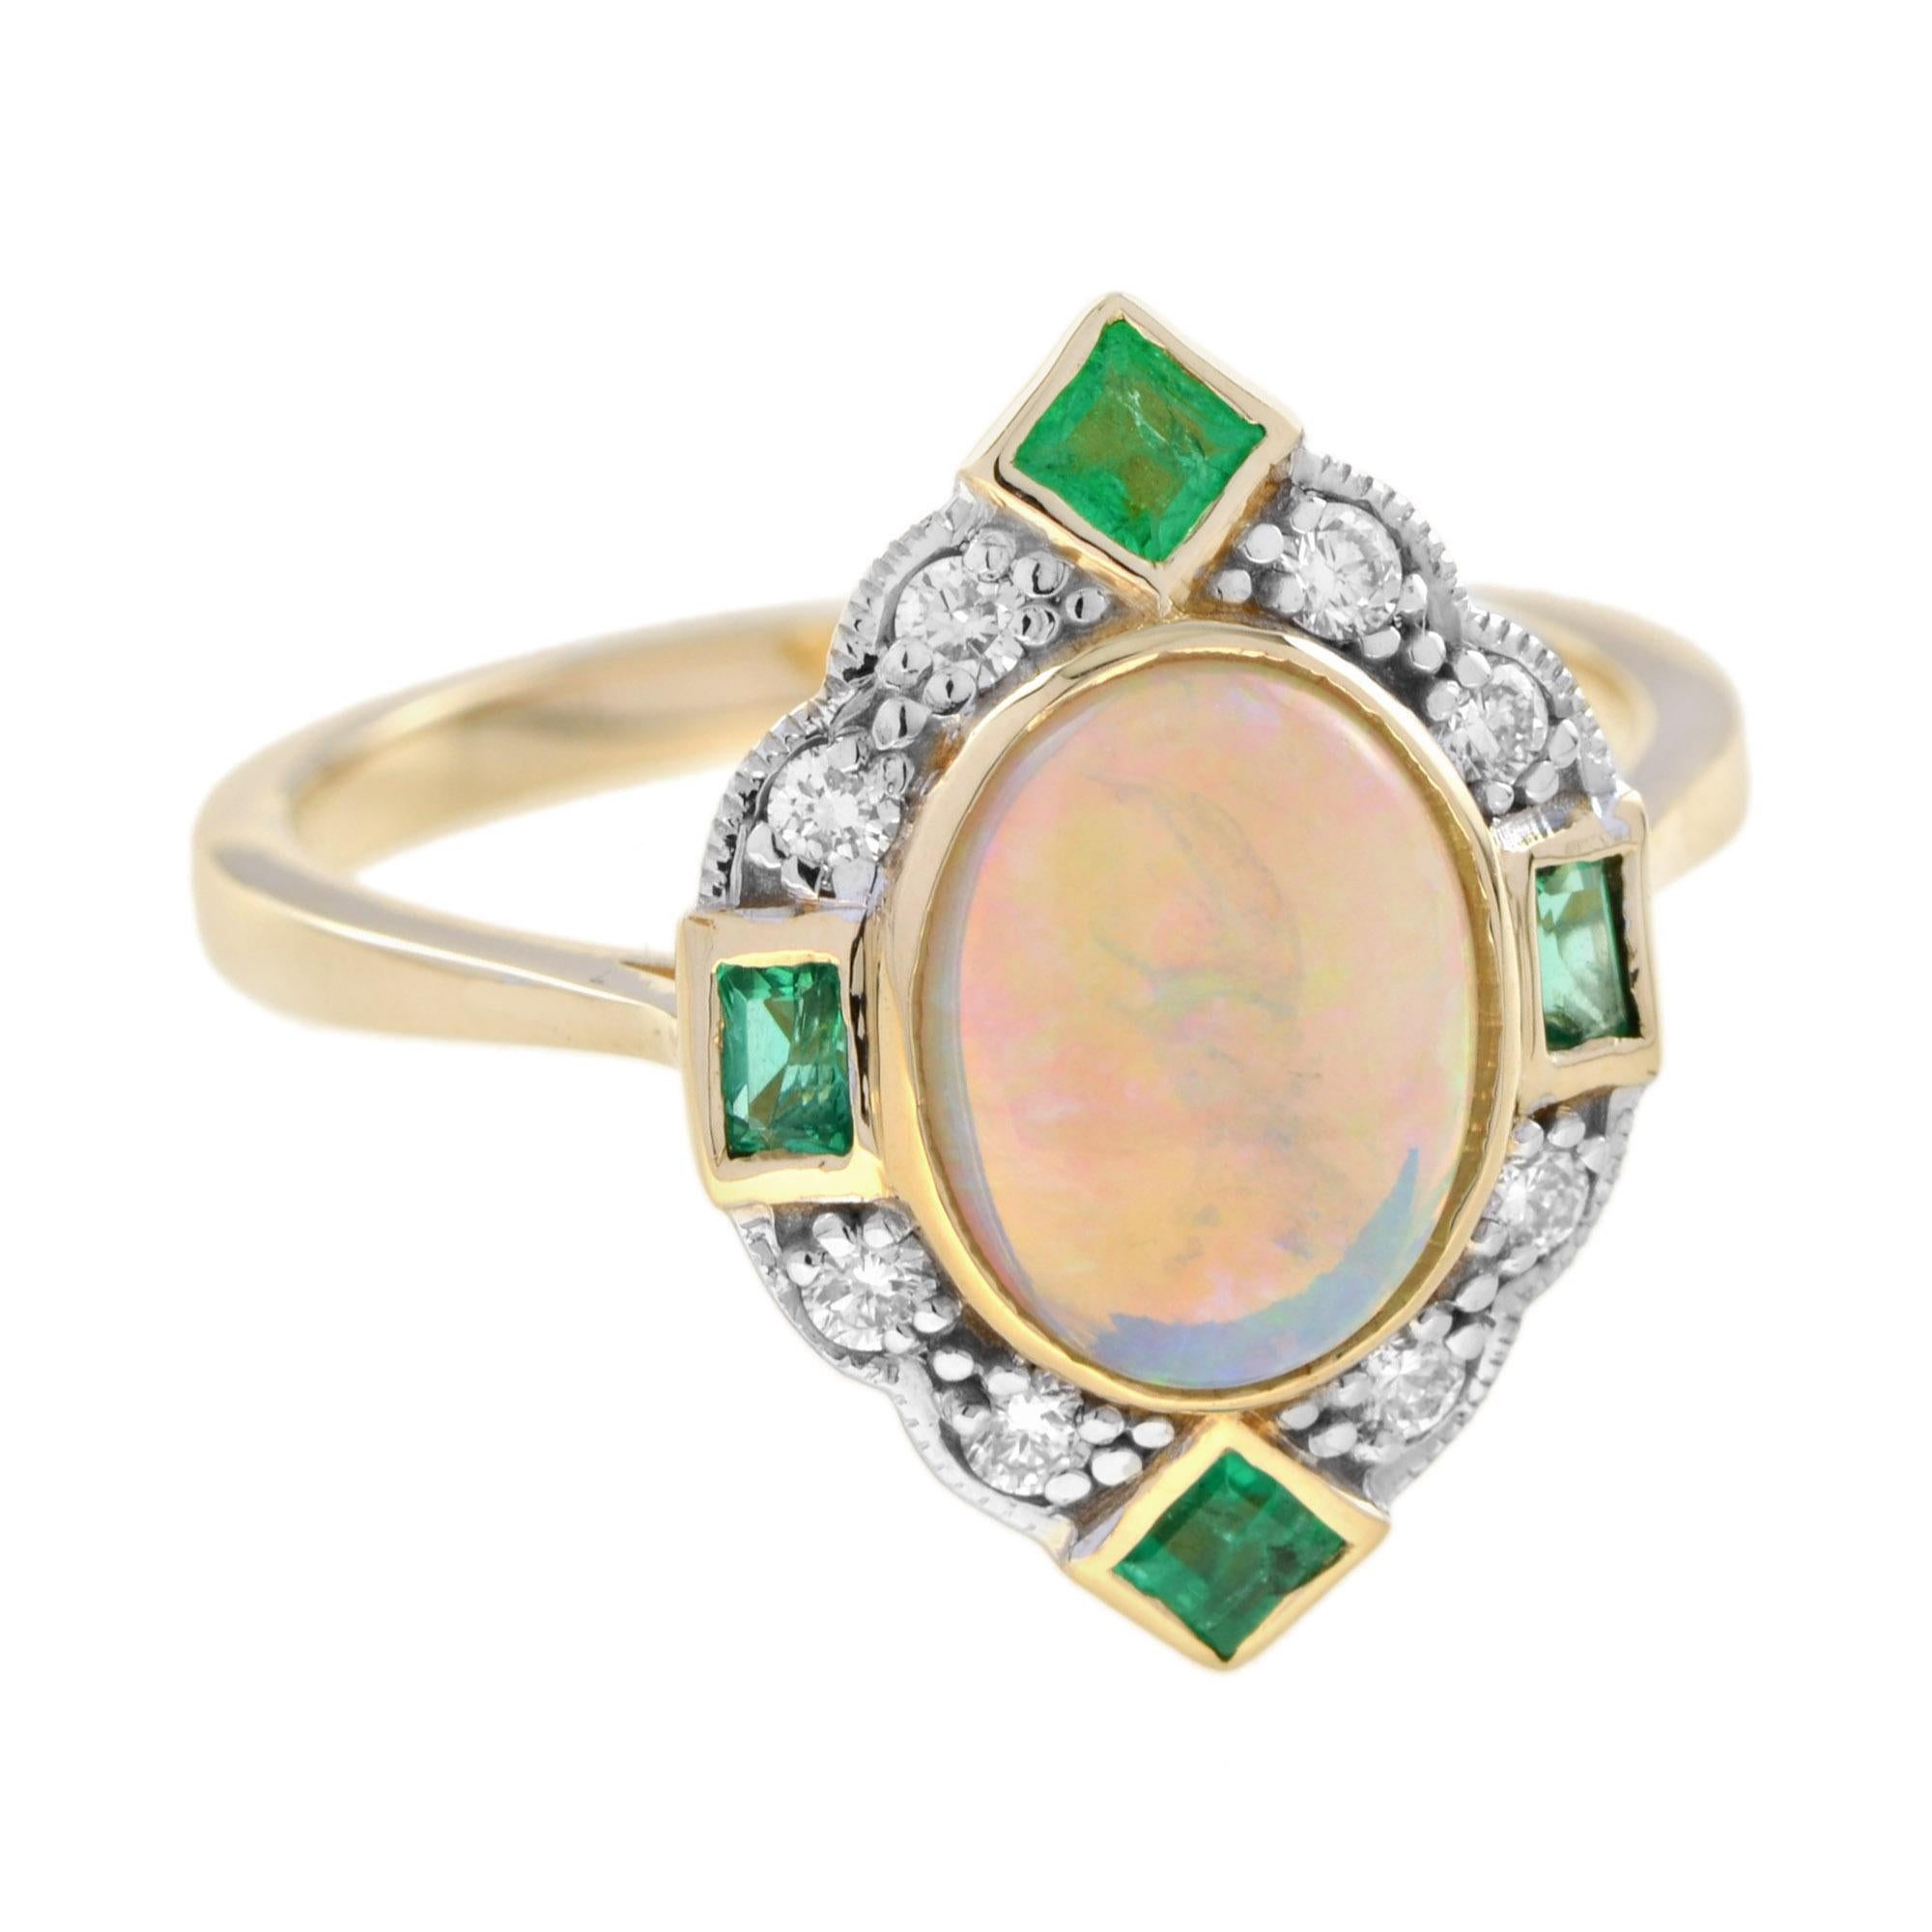 Oval Cut Australian Opal Emerald Diamond Art Deco Style Halo Ring in 14K Yellow Gold